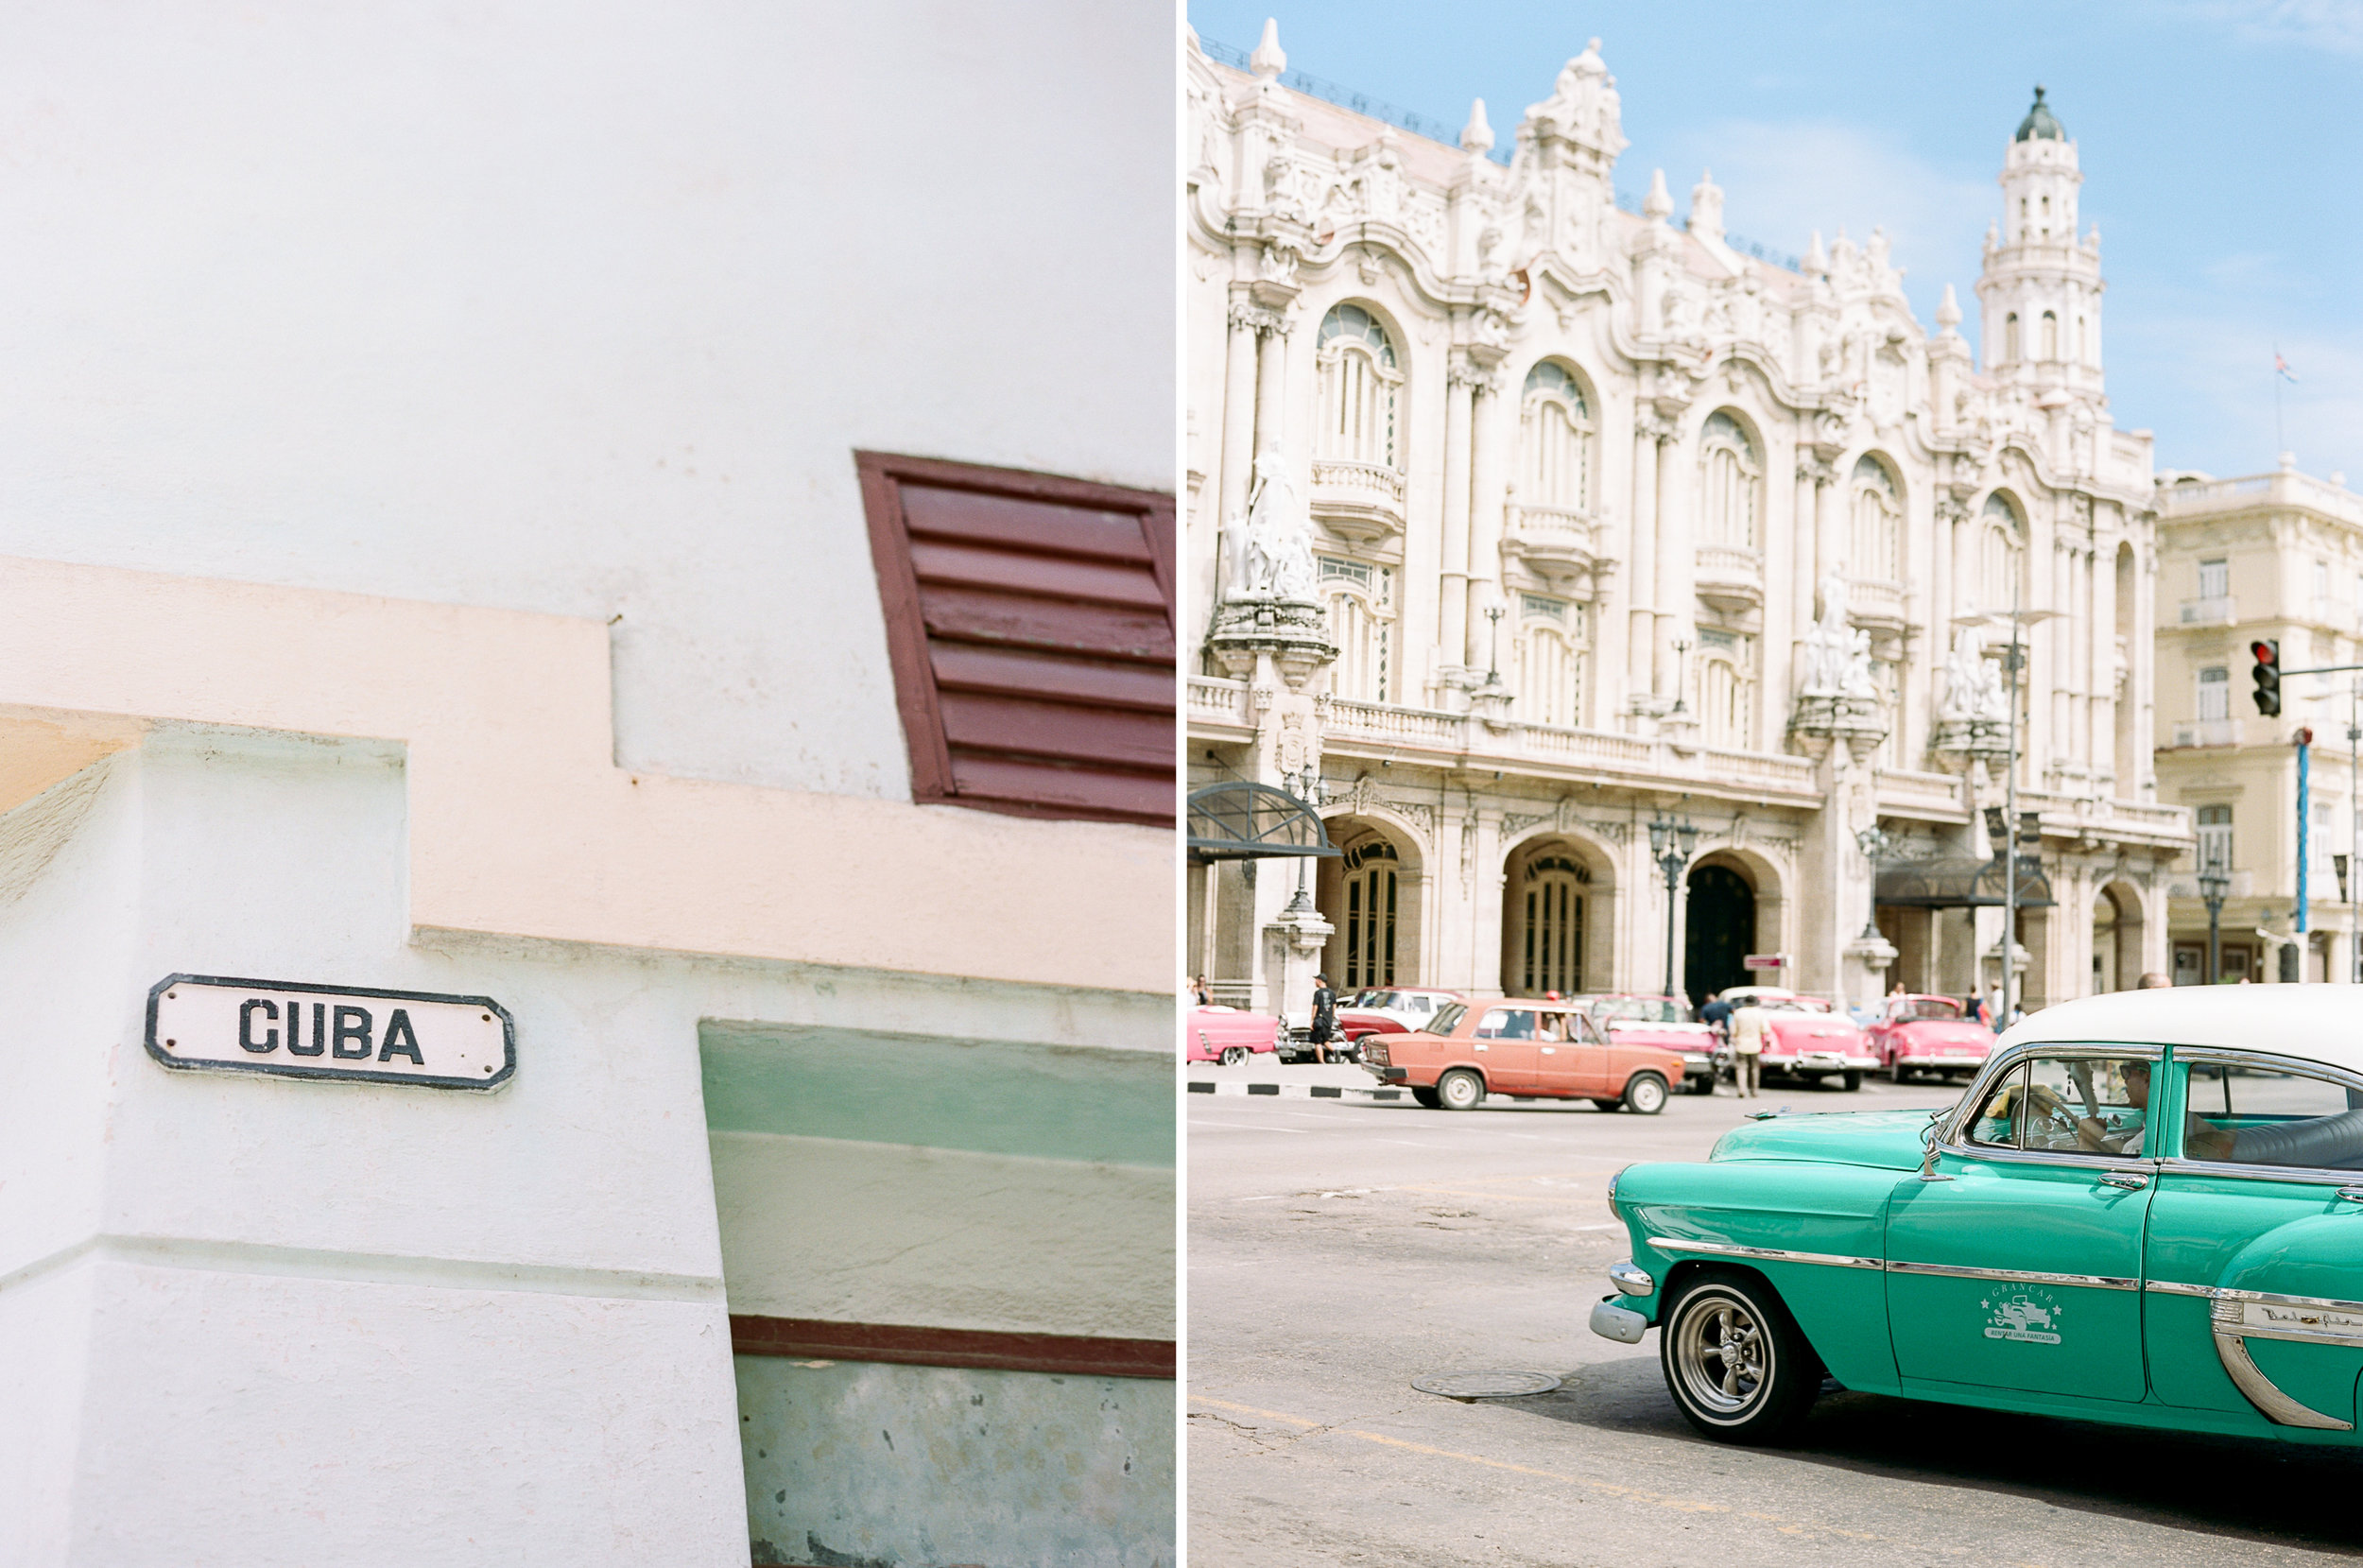 Cuba-Travel-photography-rachael-mcitnosh-photography-104.jpg